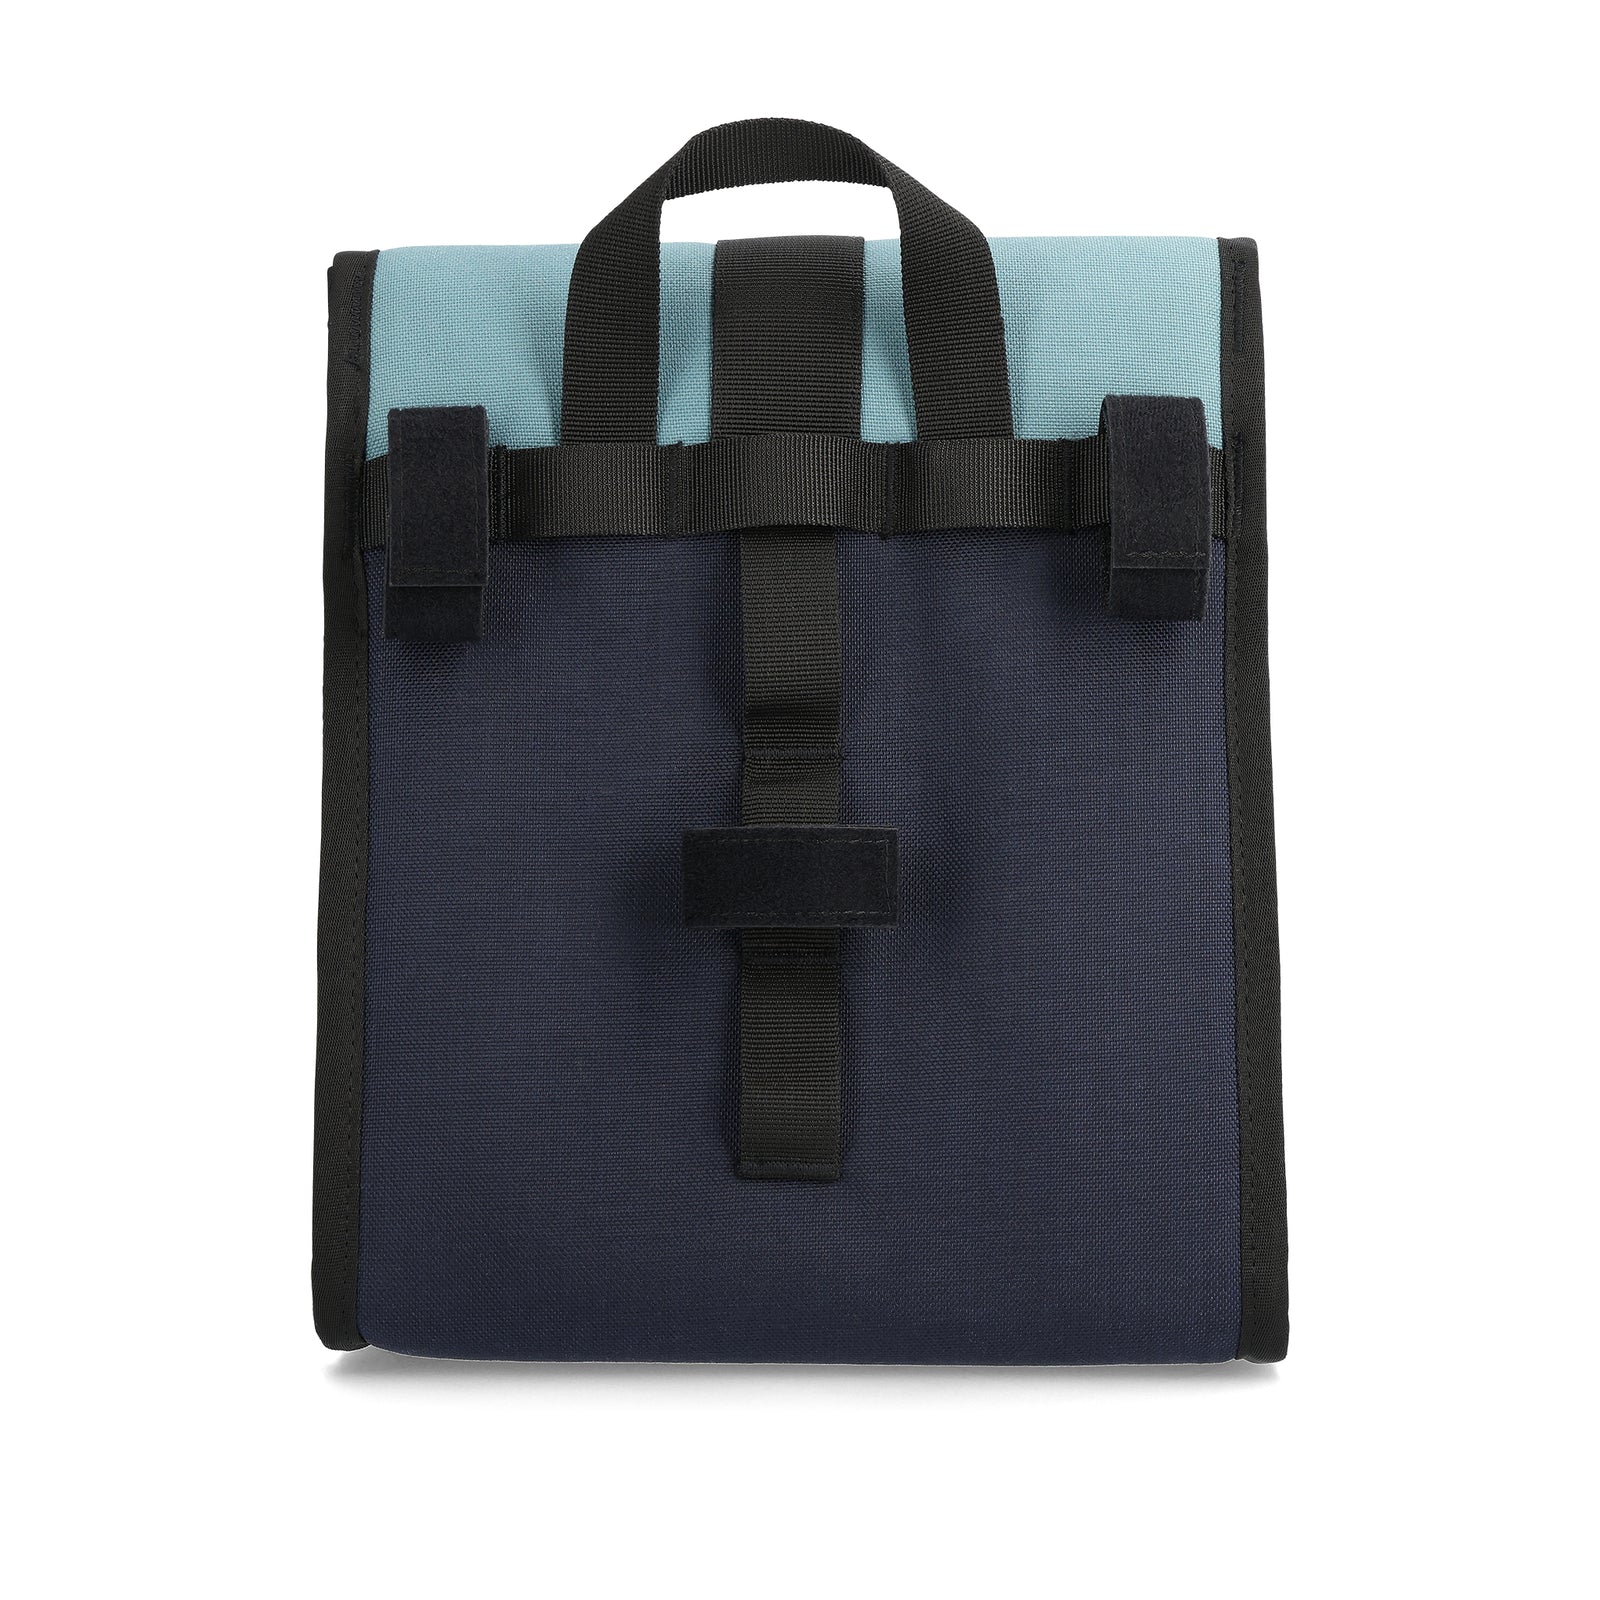 Back View of Topo Designs Cooler Bag  in "Sea Pine / Mustard"